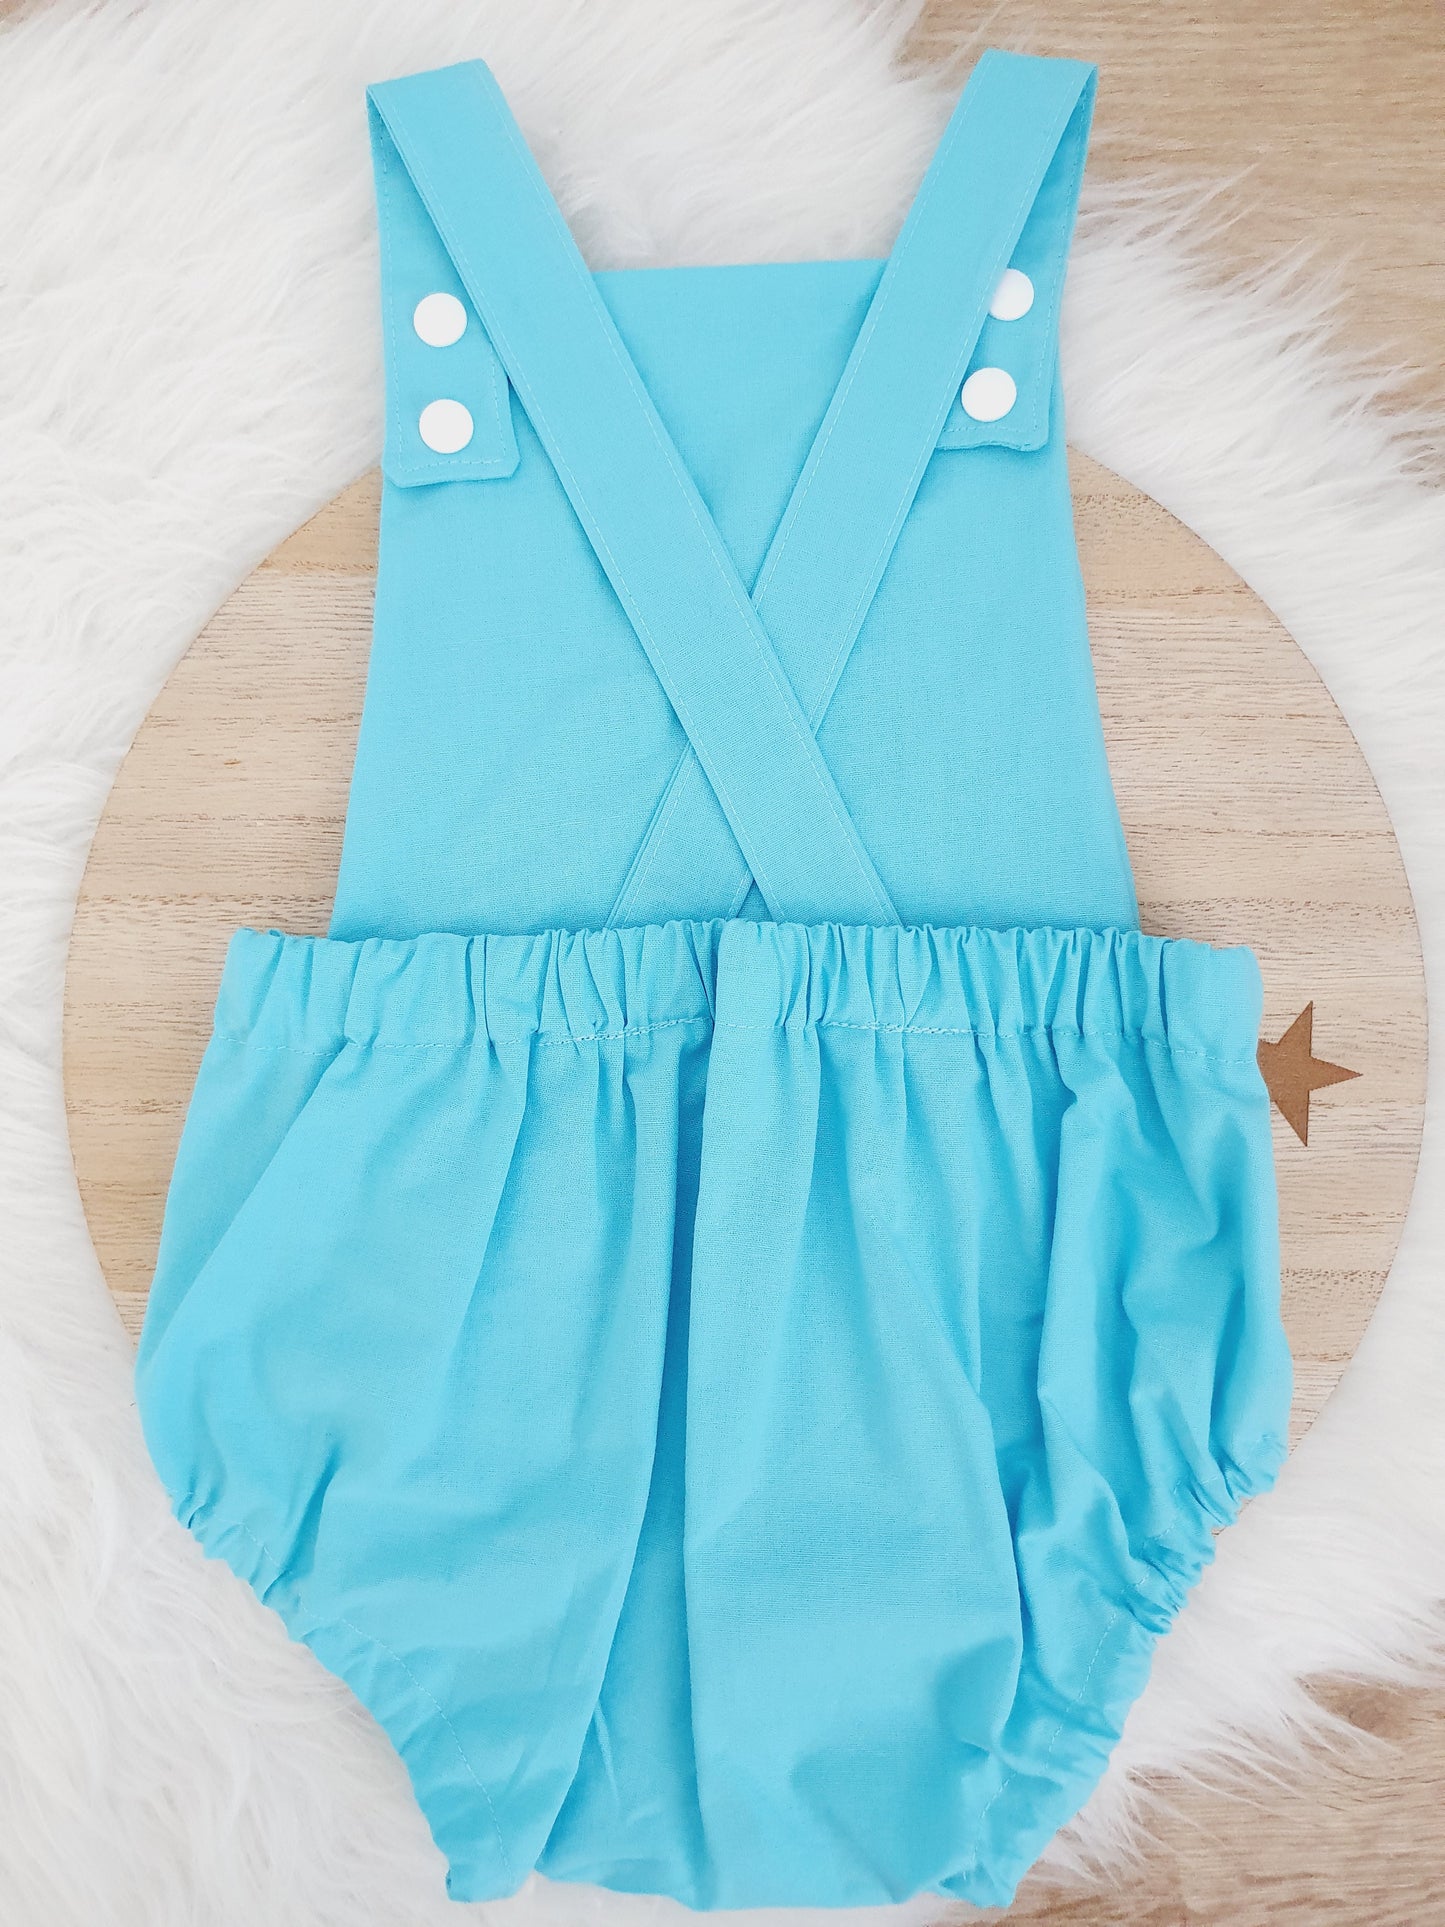 AQUA BLUE Baby Romper, Handmade Baby Clothing, Size 1 - 1st Birthday Clothing / Cake Smash Outfit - AQUA, 12 - 18 months